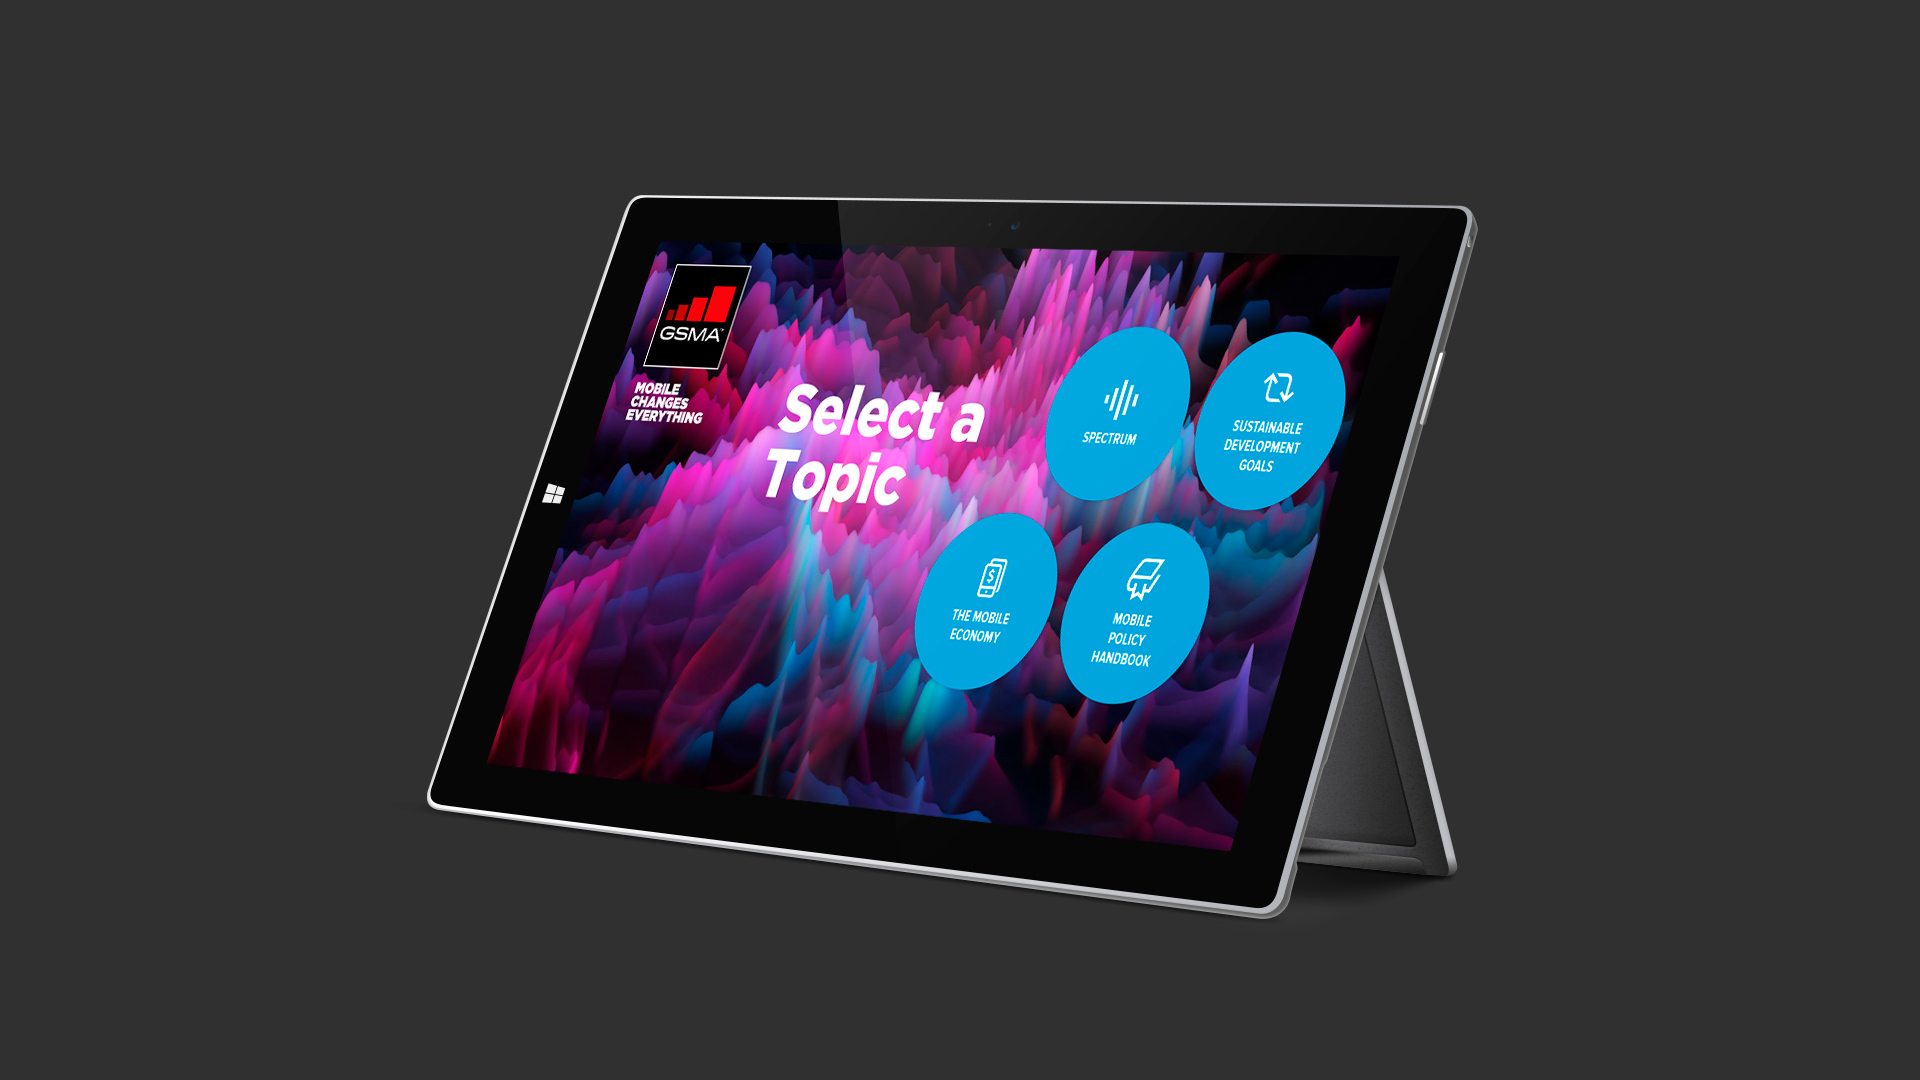 Black windows tablet displaying GSMA interactive touchscreen digital presentation